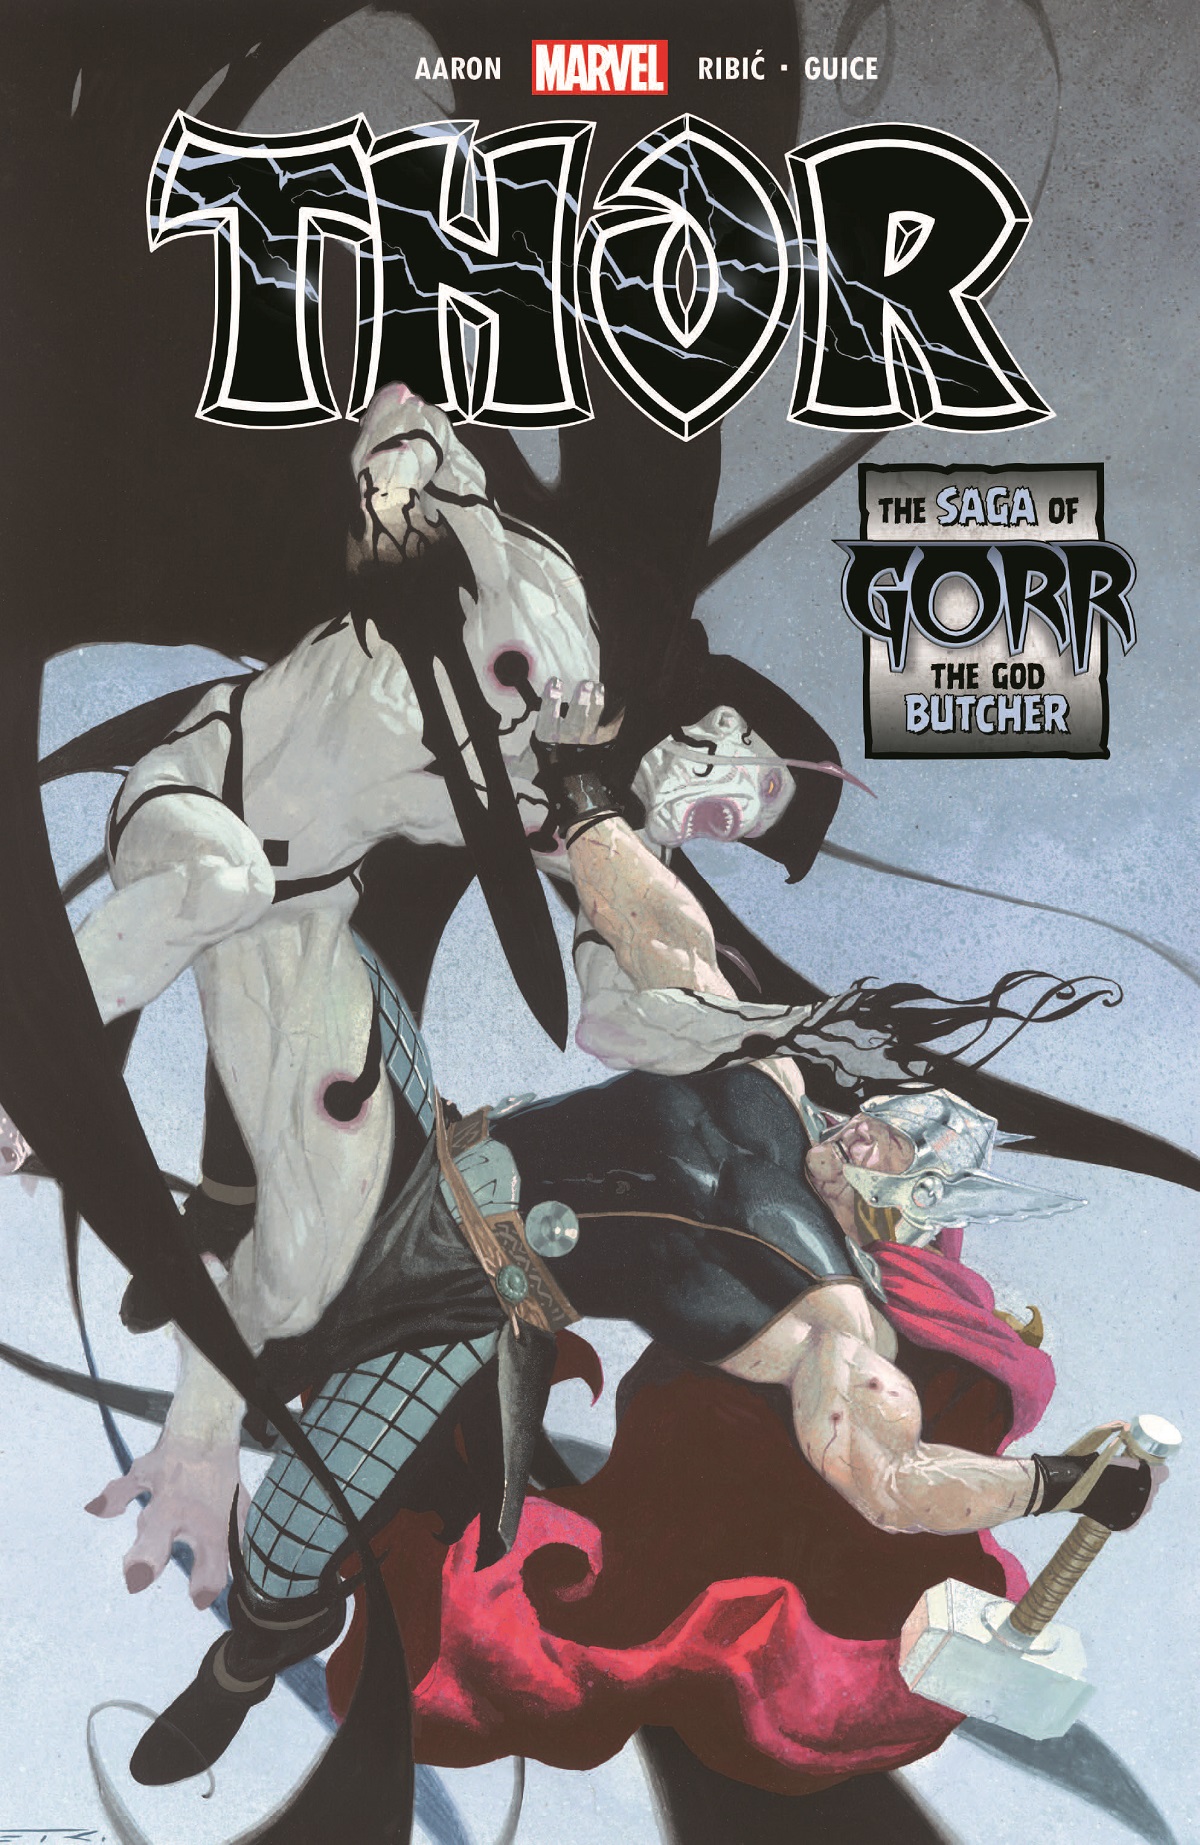 Thor: The Saga Of Gorr The God Butcher (Trade Paperback)